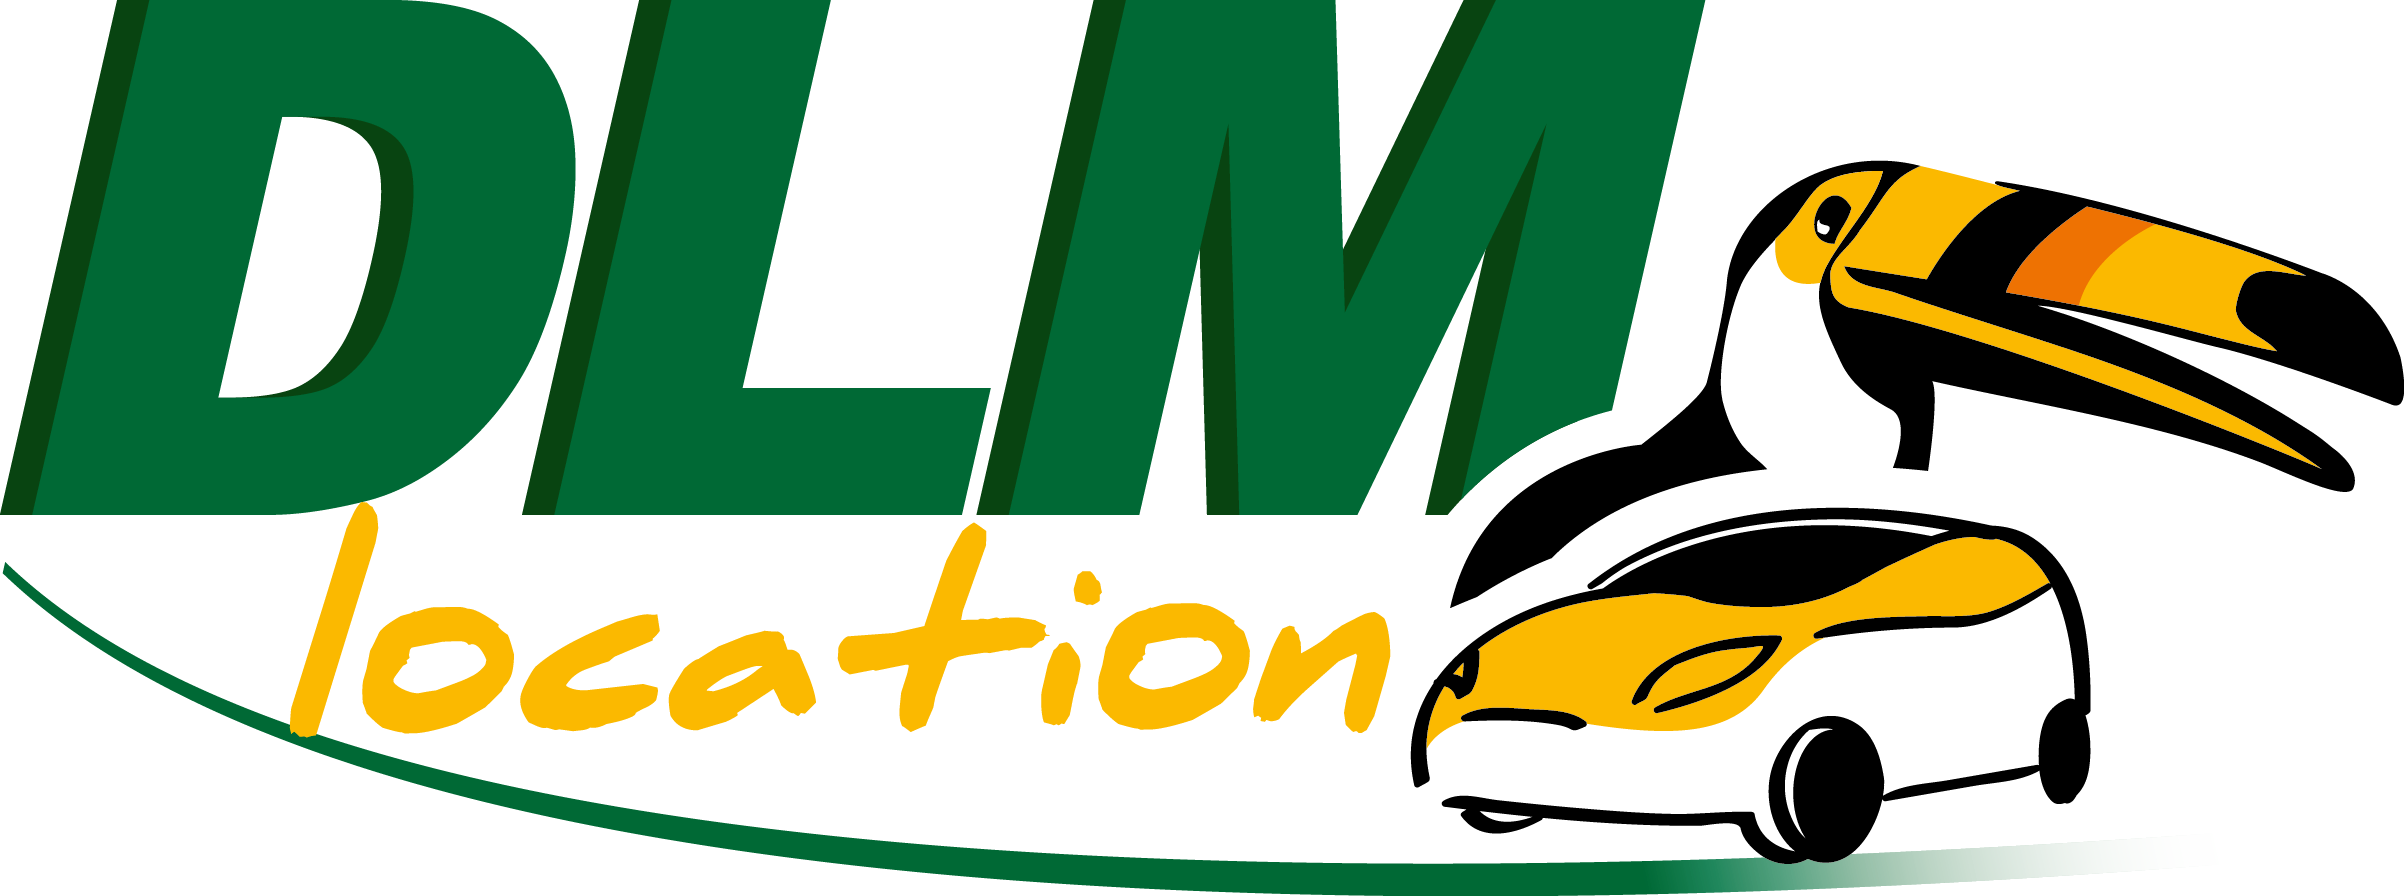 DLM location